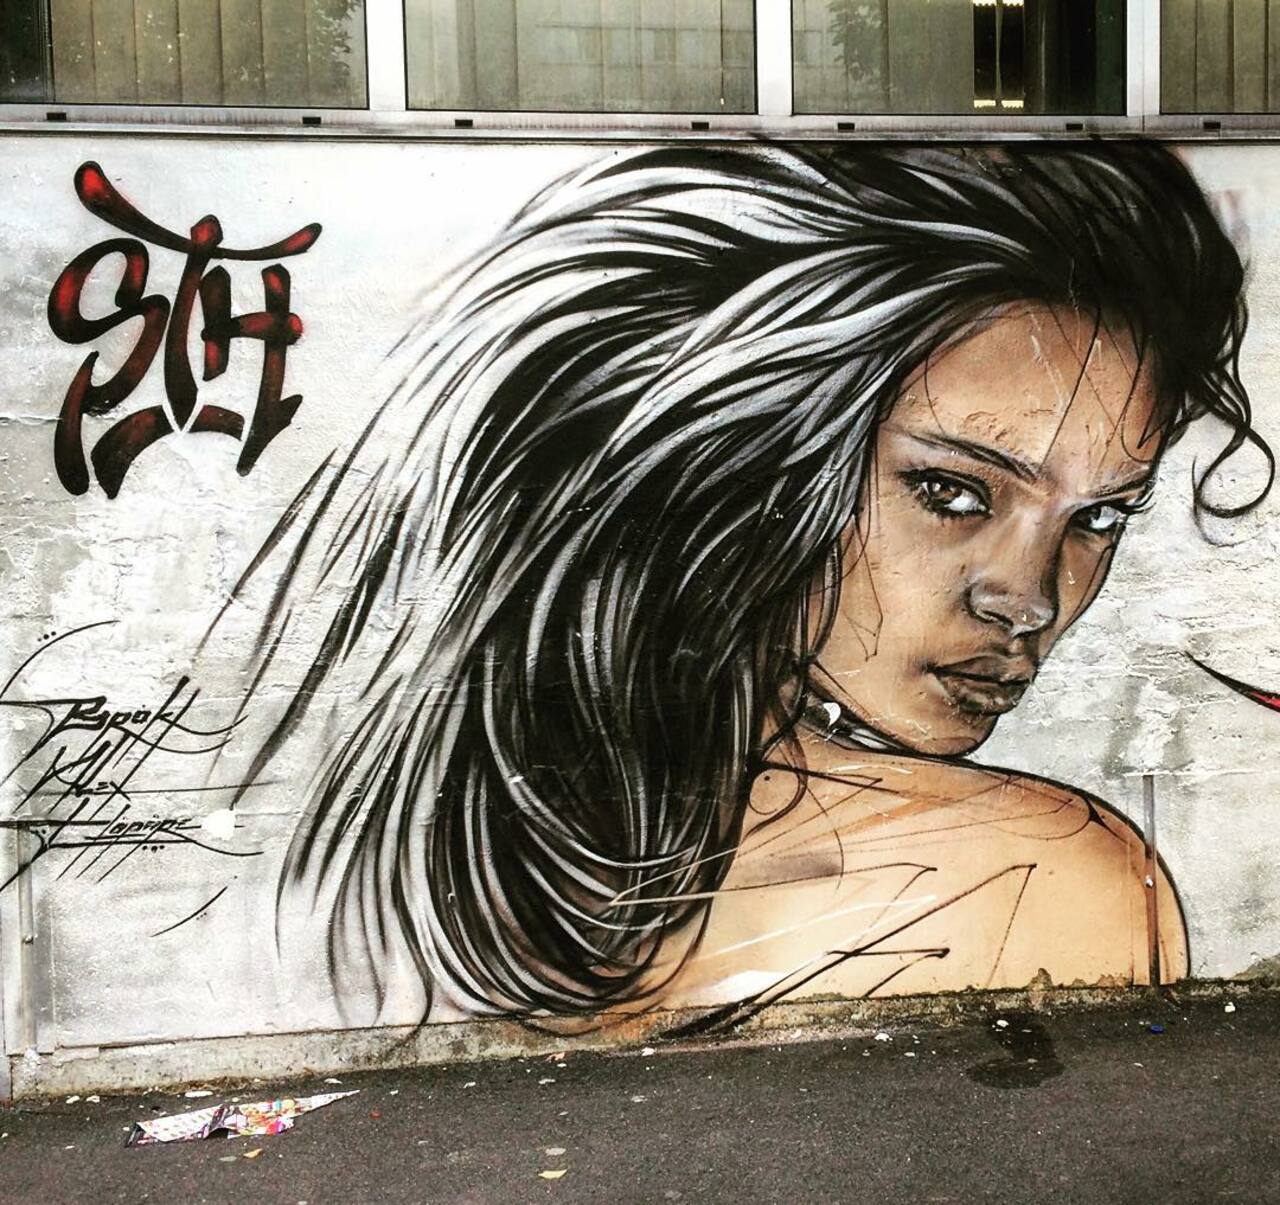 #Paris #graffiti photo by @julosteart http://ift.tt/1LK9IBc #StreetArt http://t.co/1azw0v4bIX